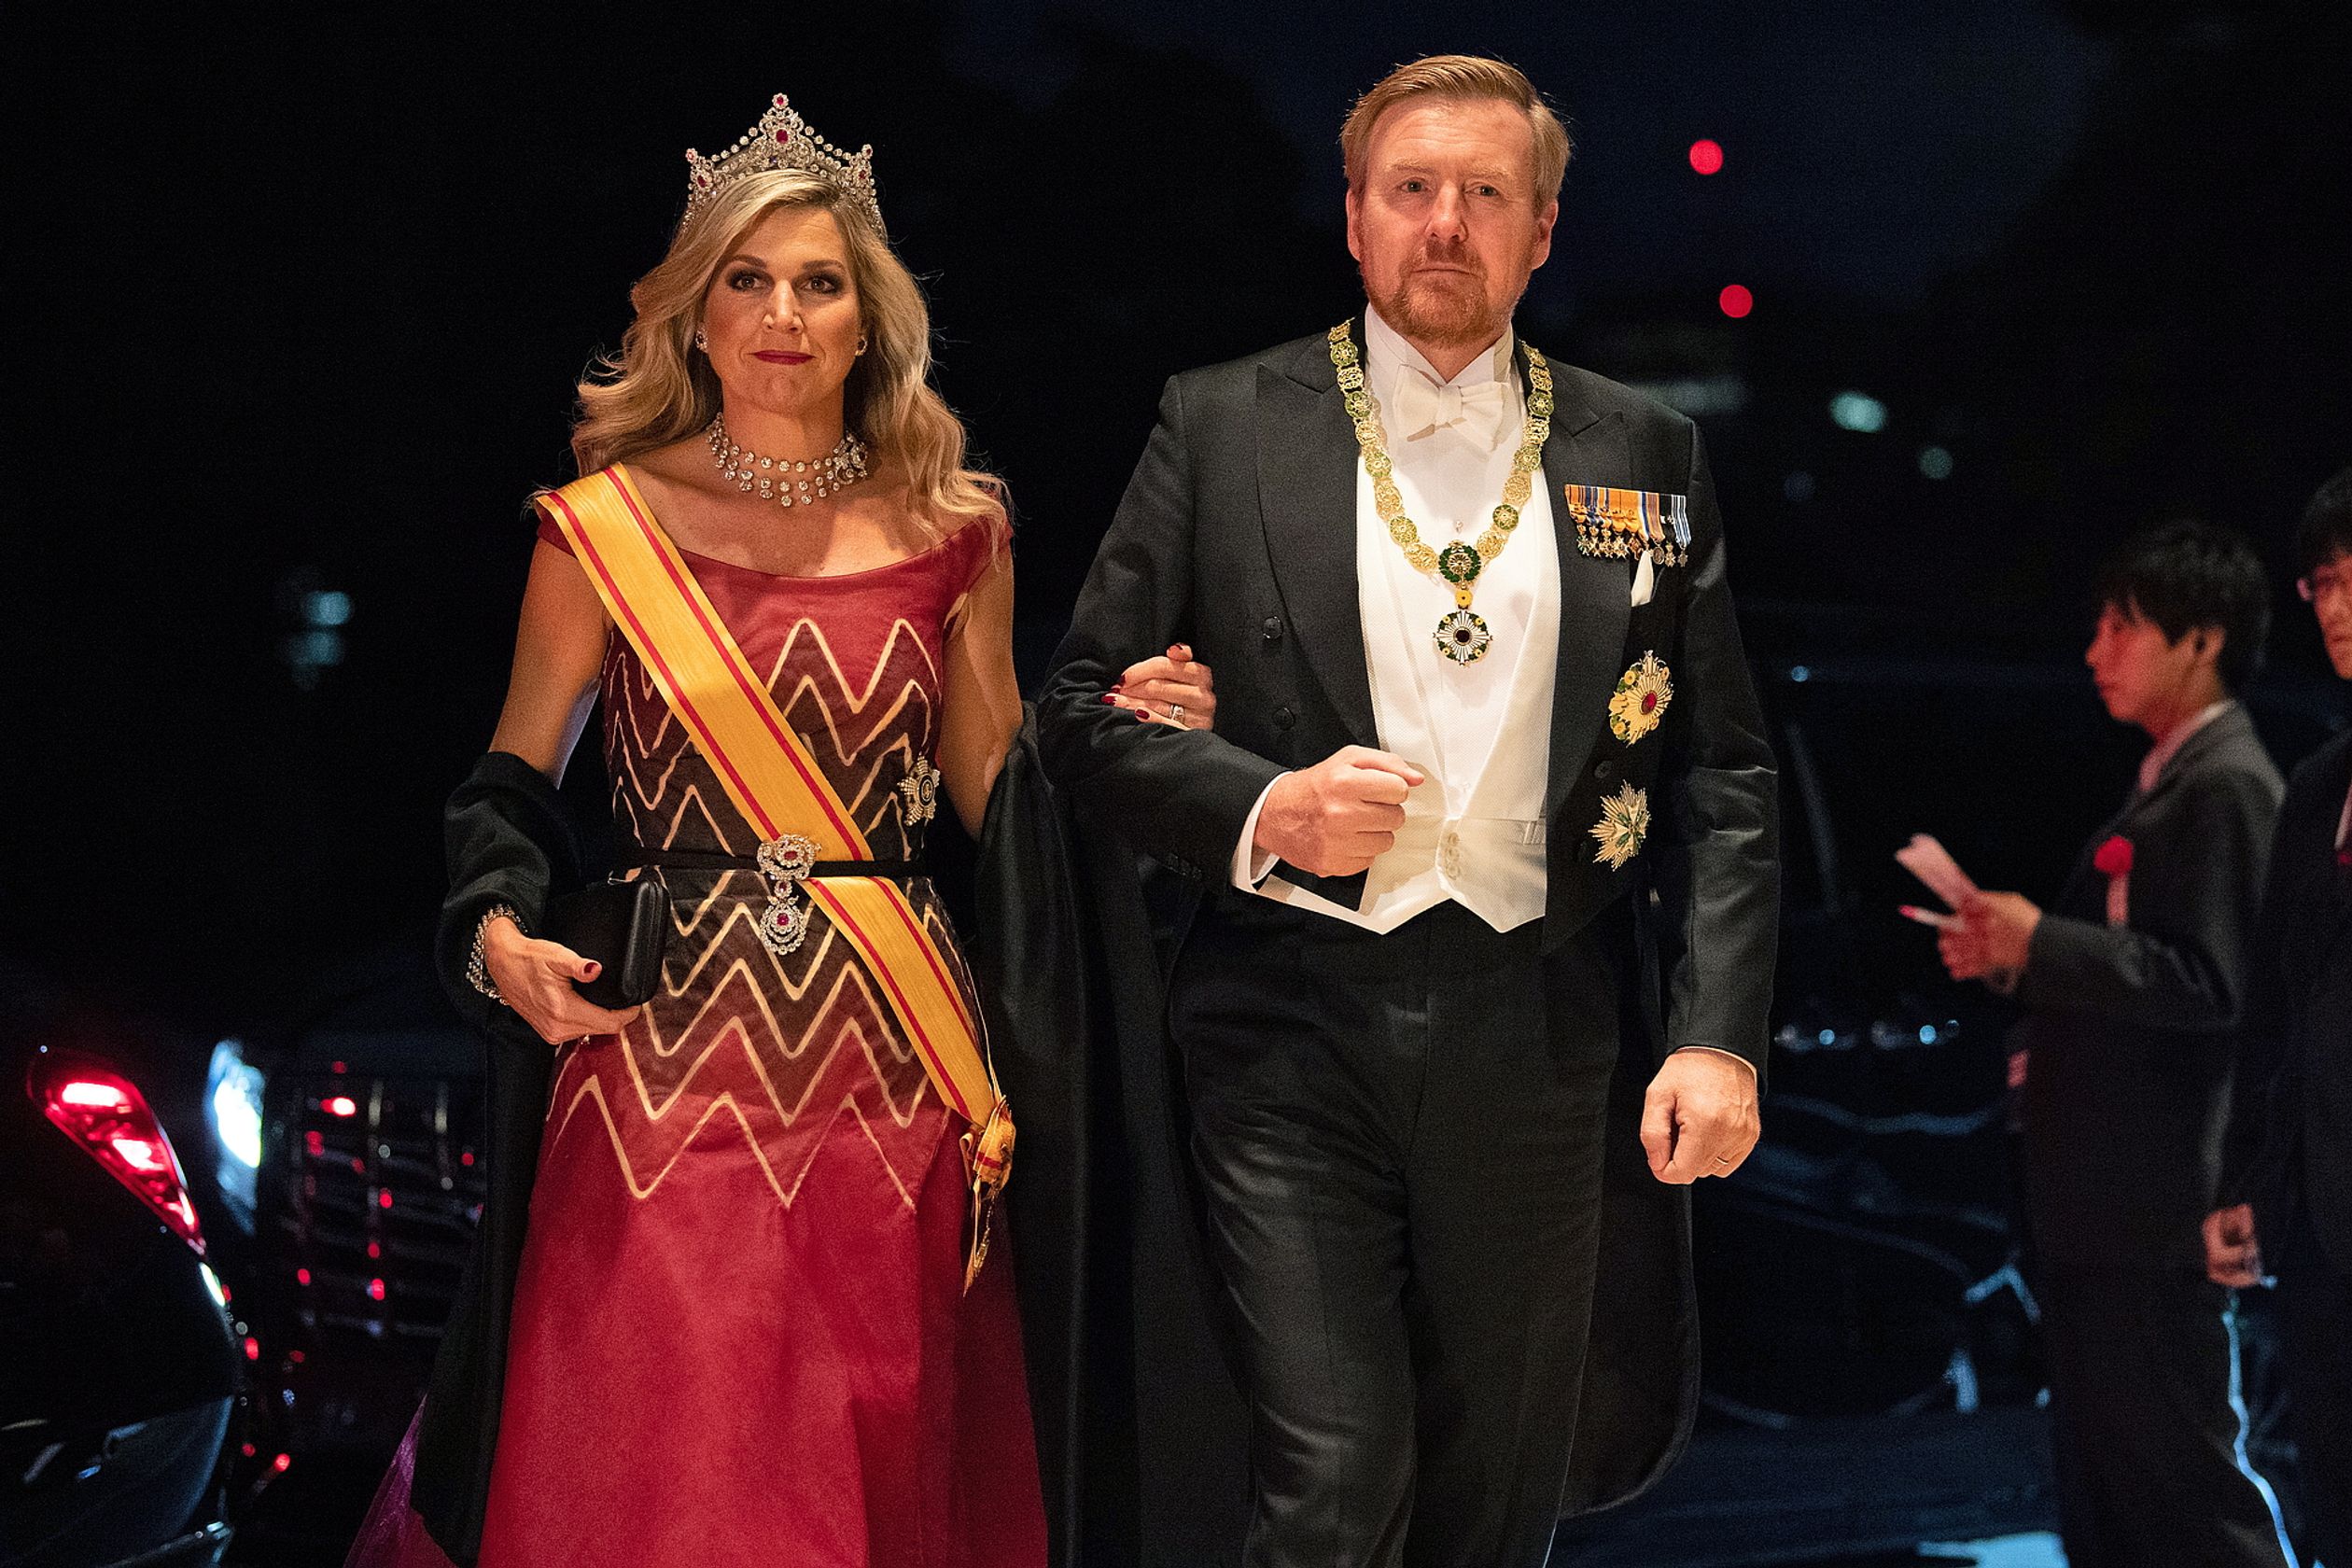 Koningin Máxima draagt een nieuwe avondjurk met zigzagpatroon van couturier Jan Taminiau.